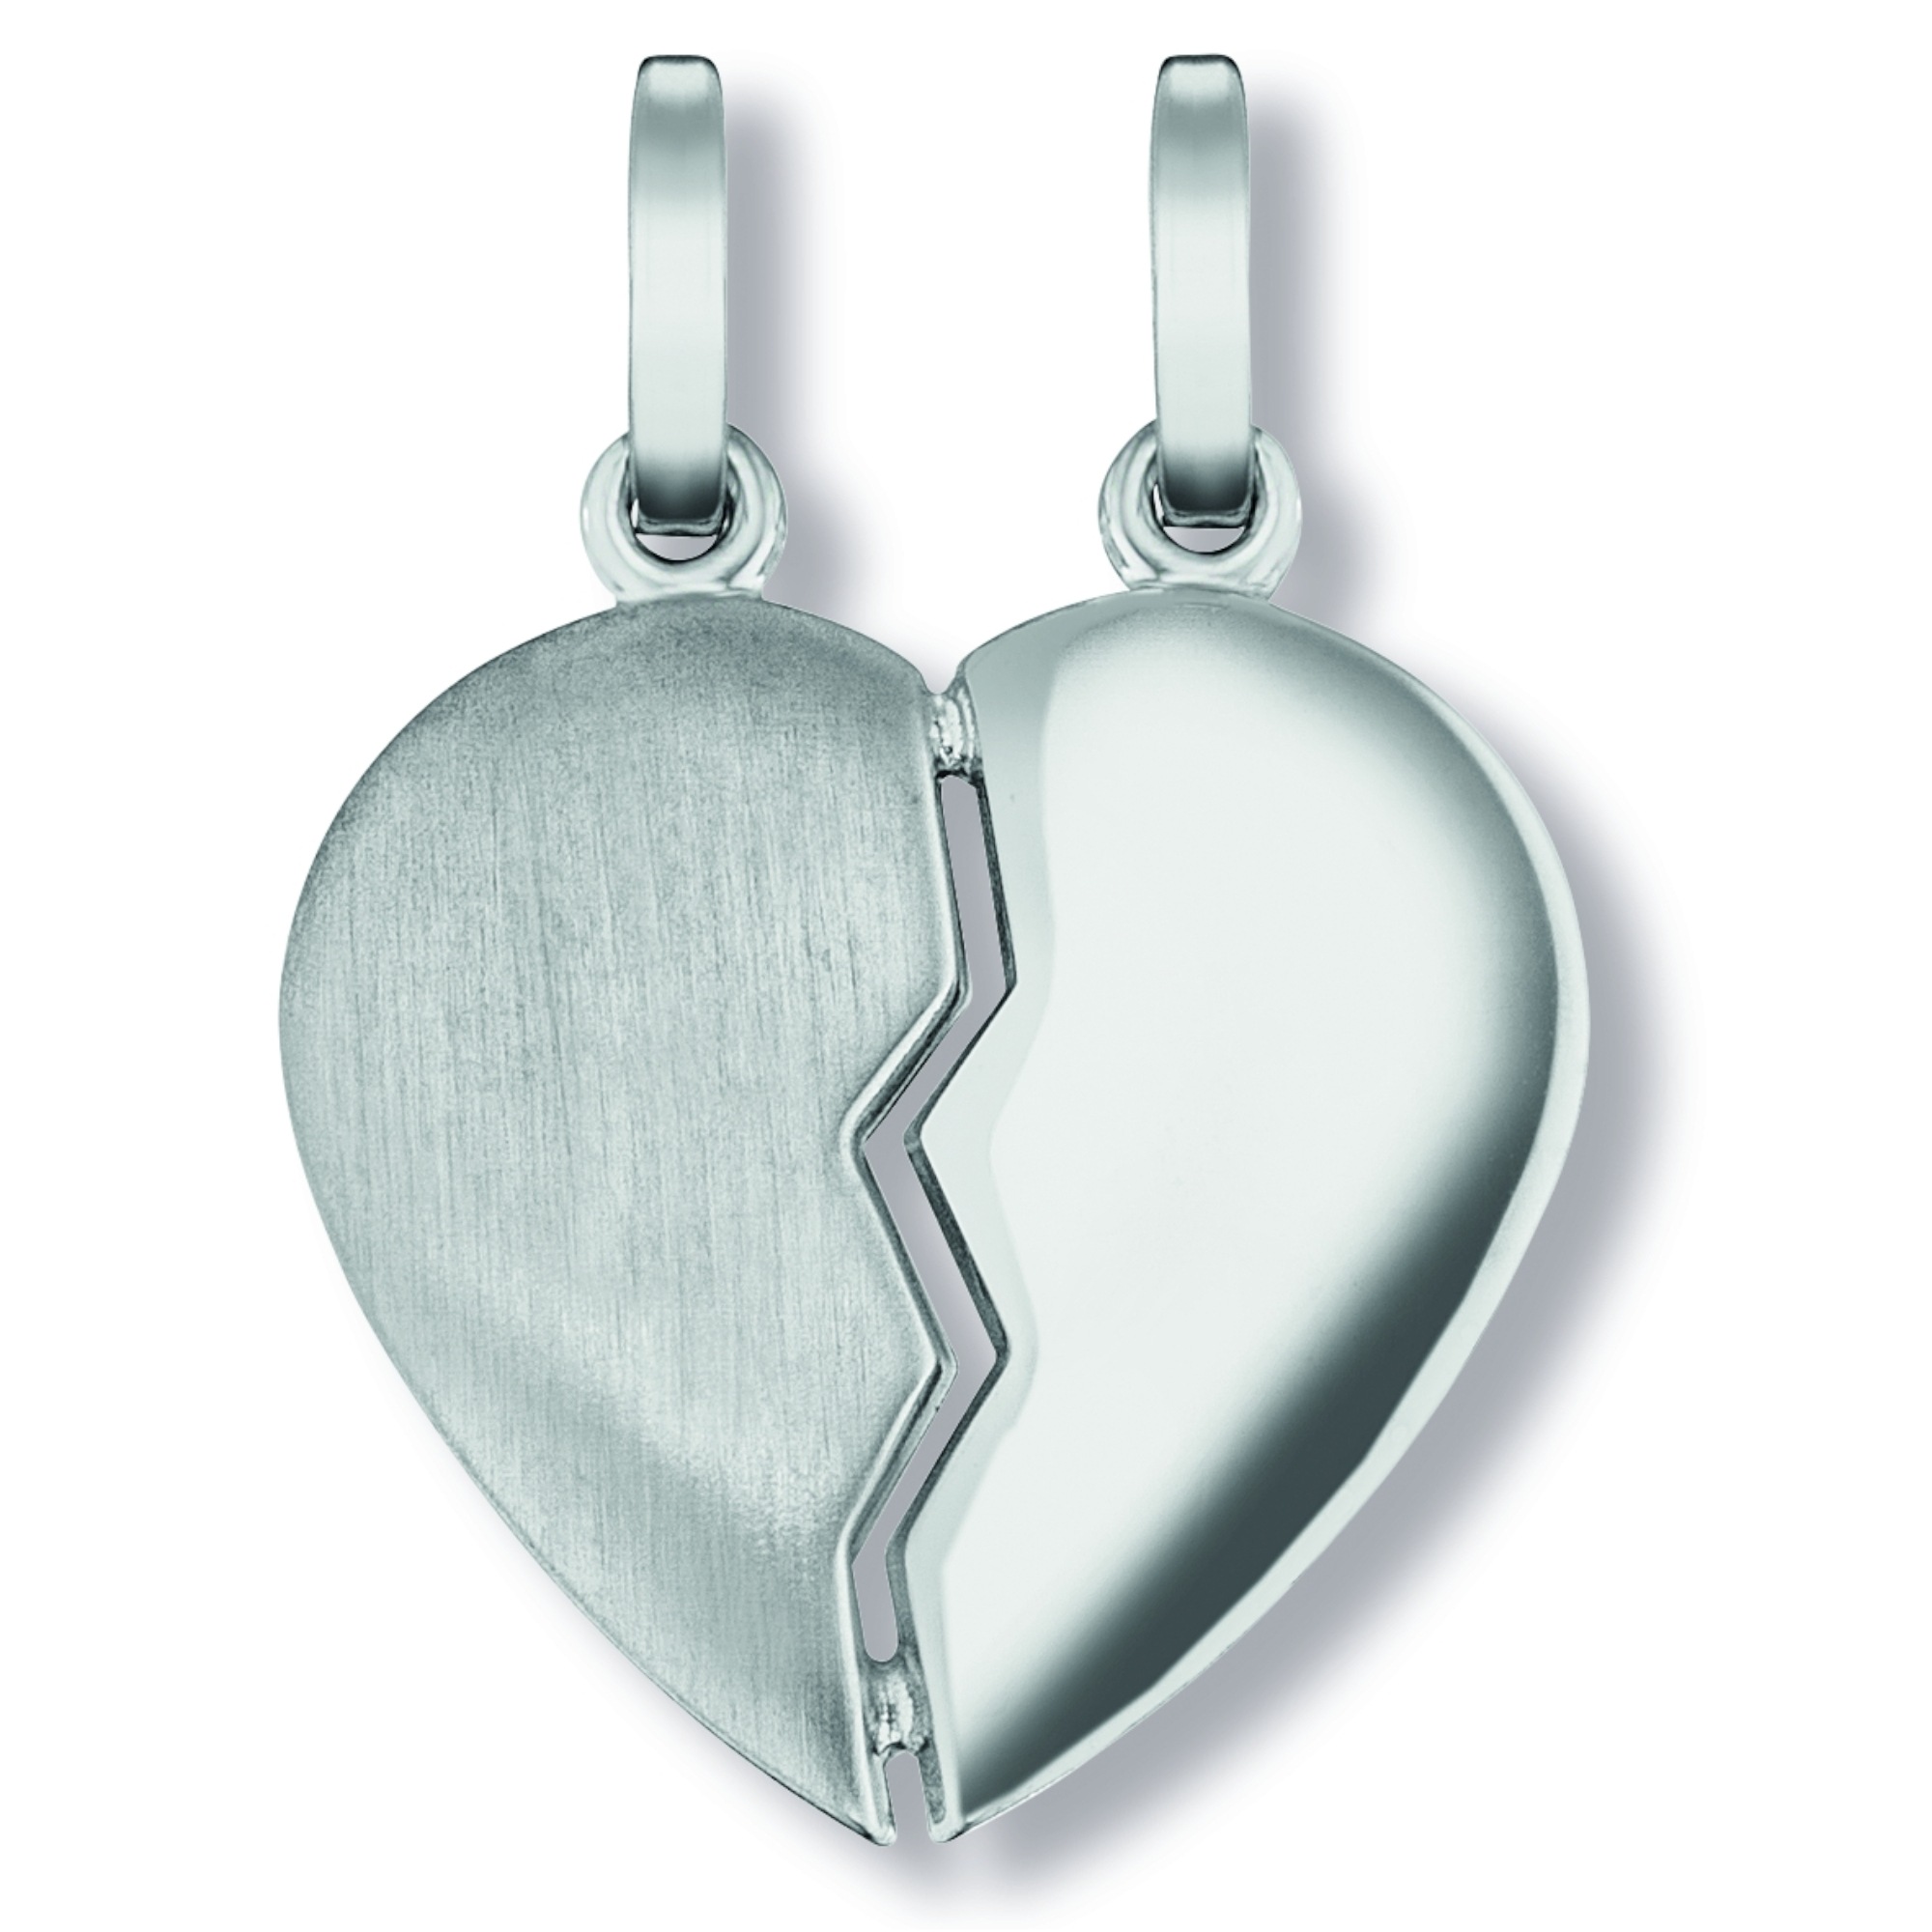 ONE Herz Damen Herz Silber 925 aus ELEMENT Kettenanhänger Silber Schmuck Herz Anhänger